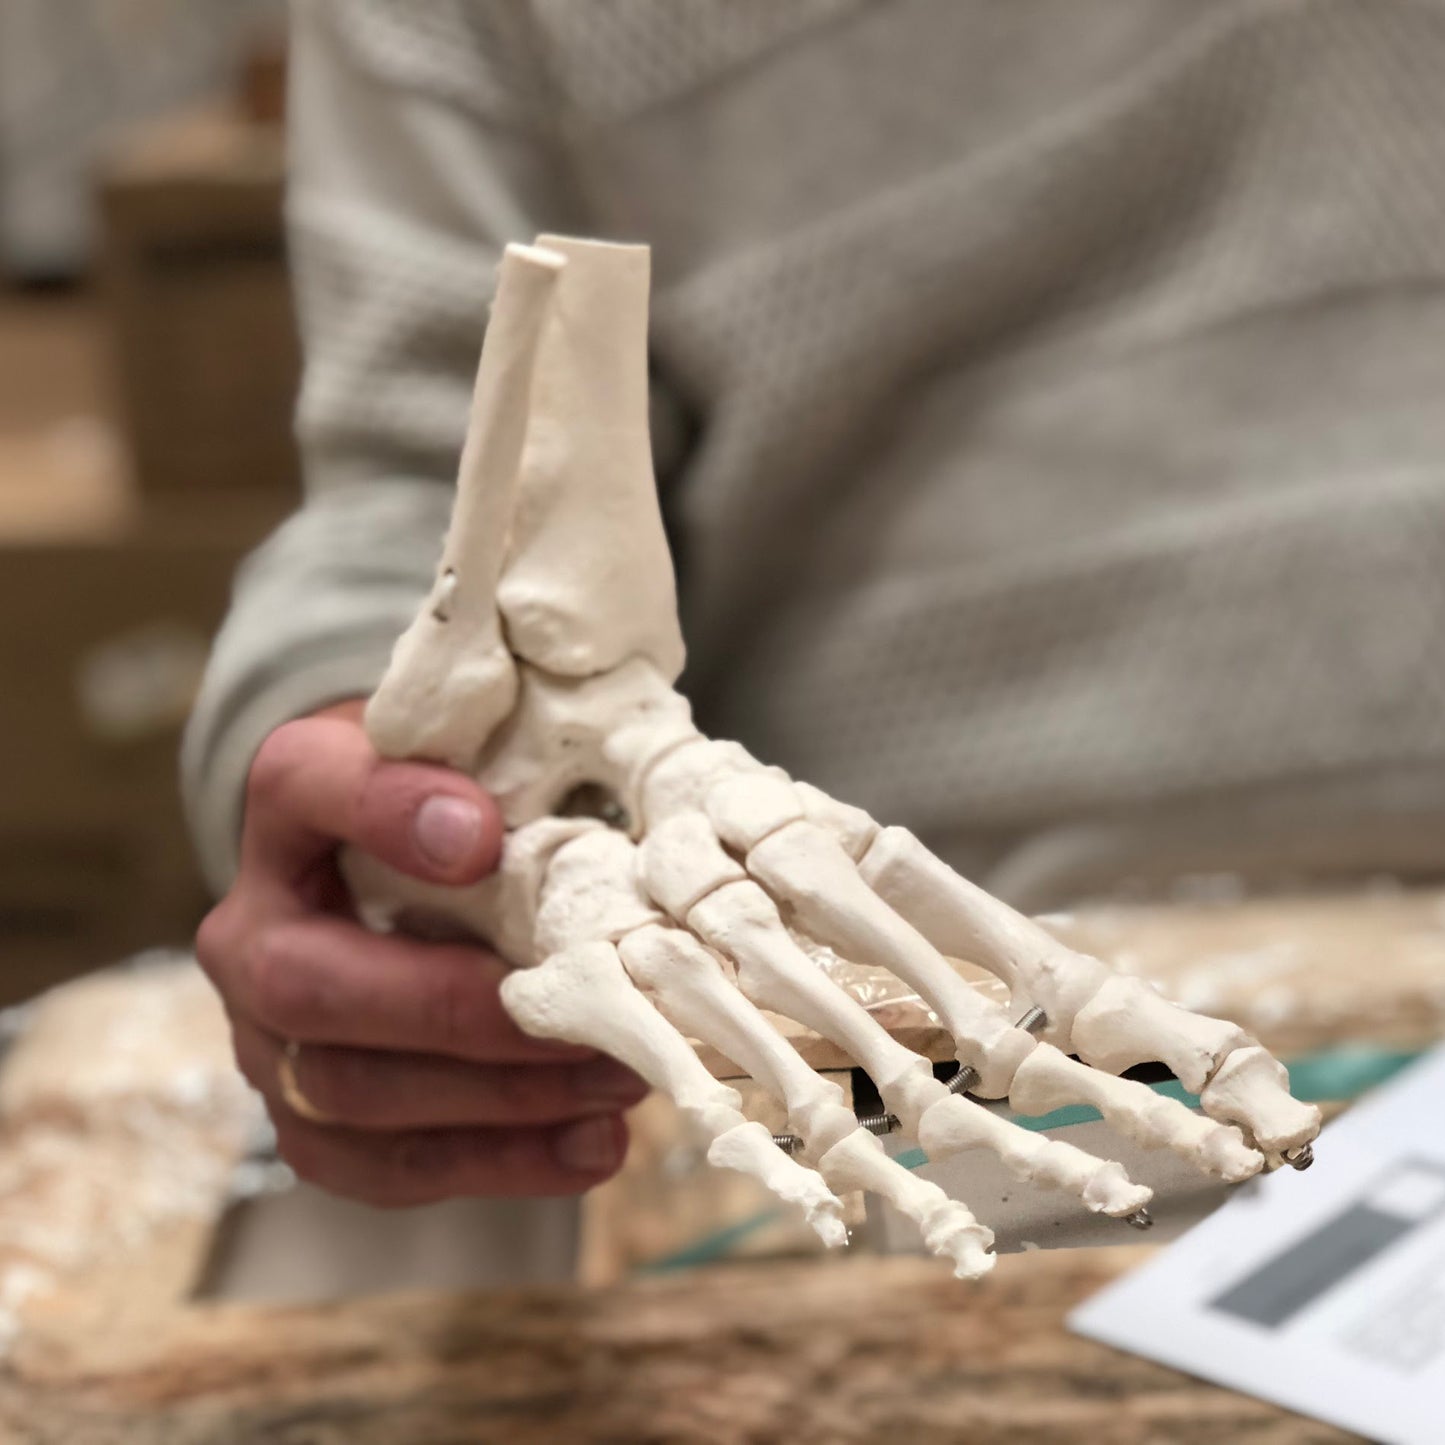 Flexibel modell av fotens skelett samt lite av skenbenet och fibula presenterat på ett avtagbart stativ